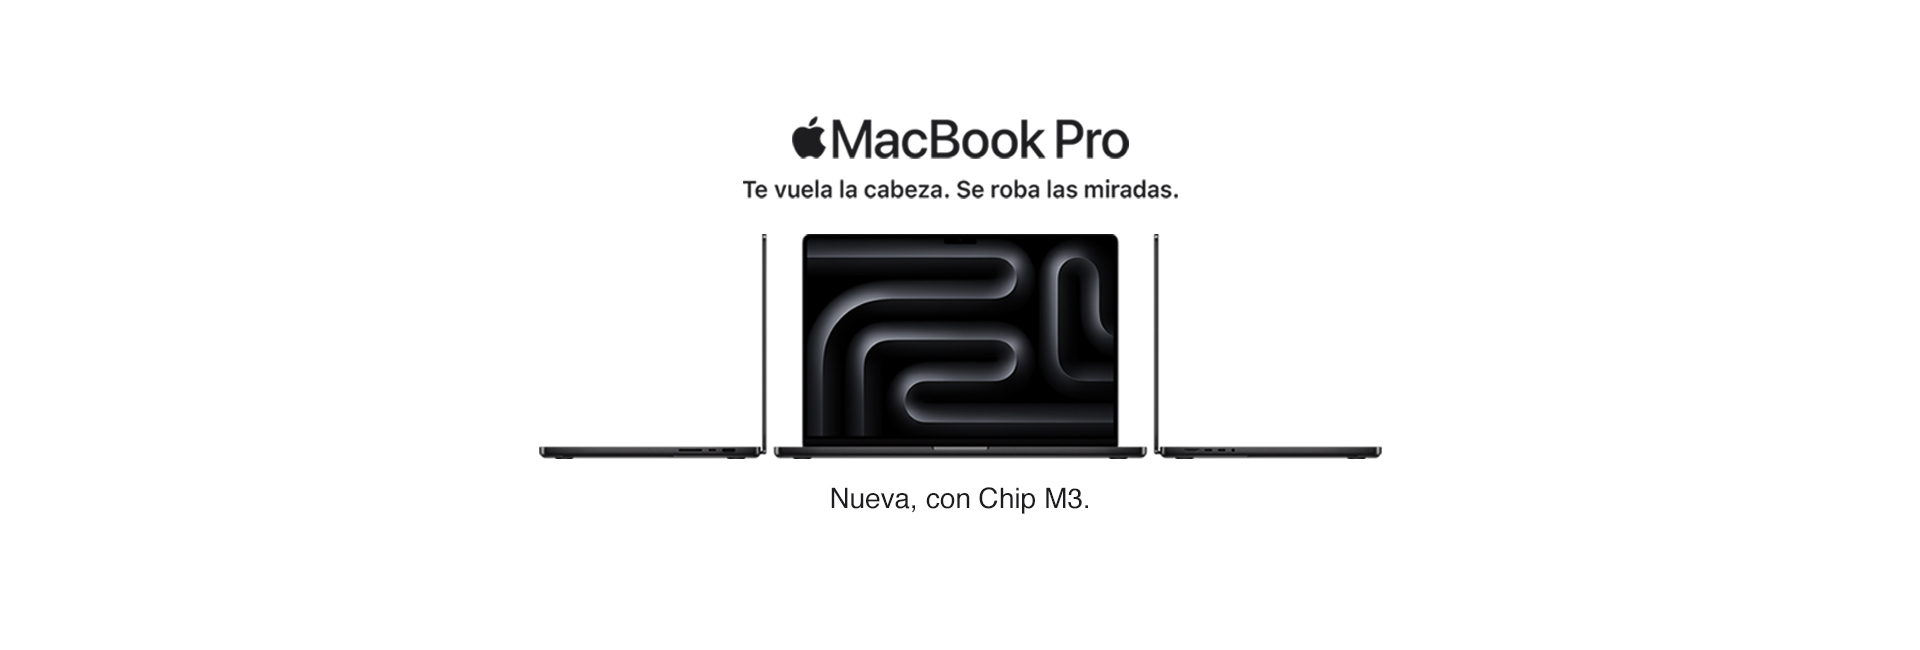 macbookprom3